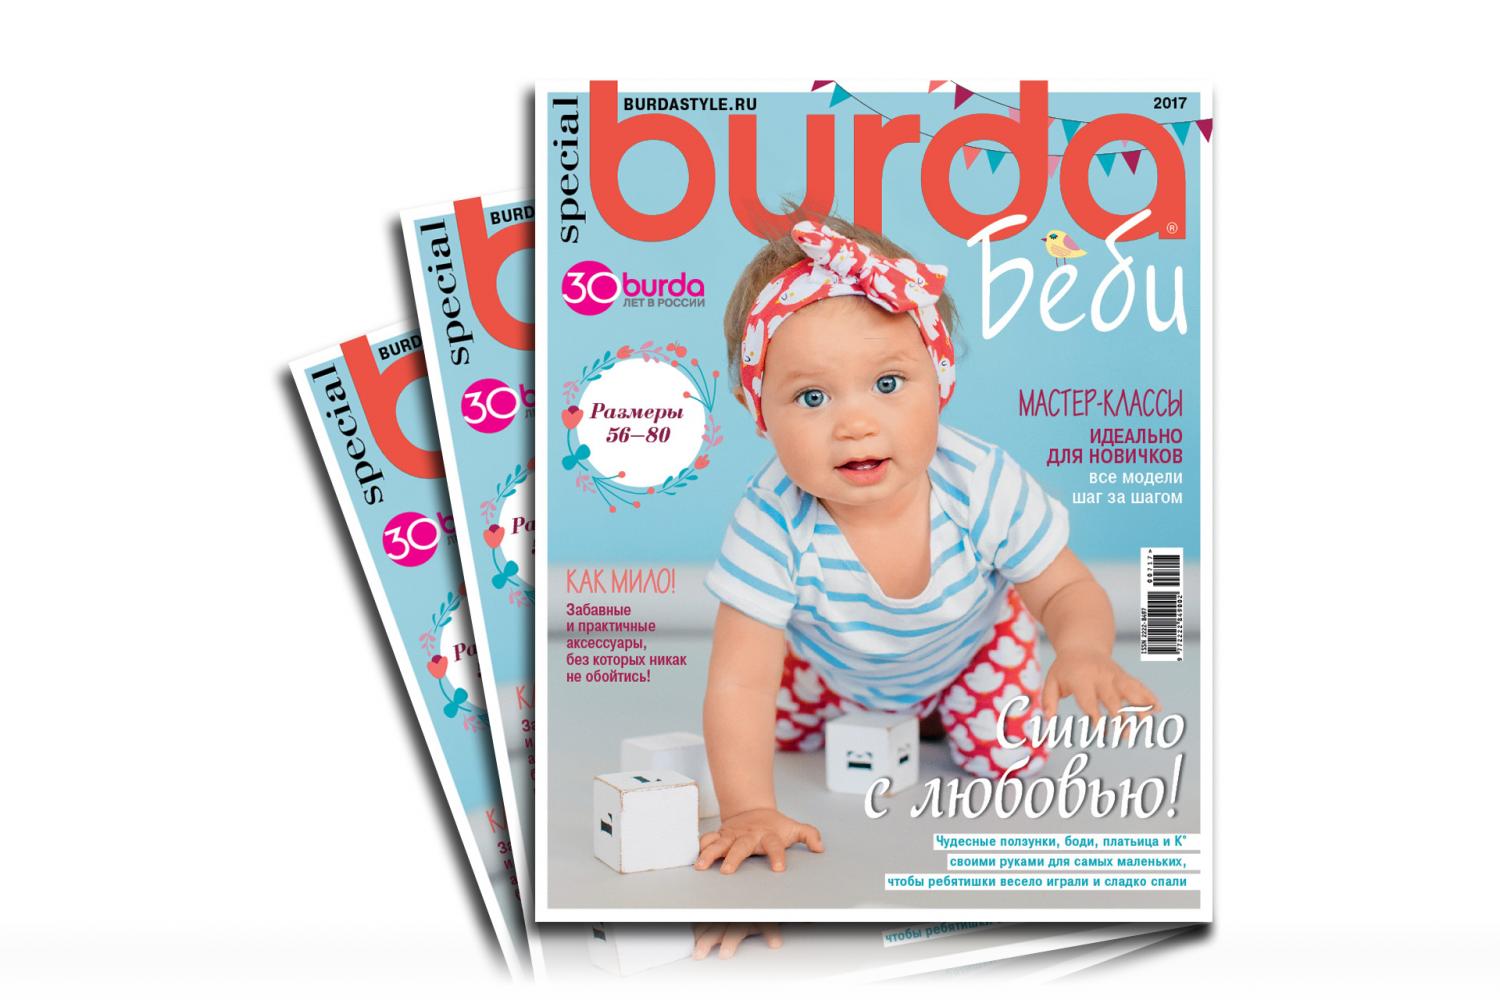 Журнал "Бурда" Special 2017 - 13863